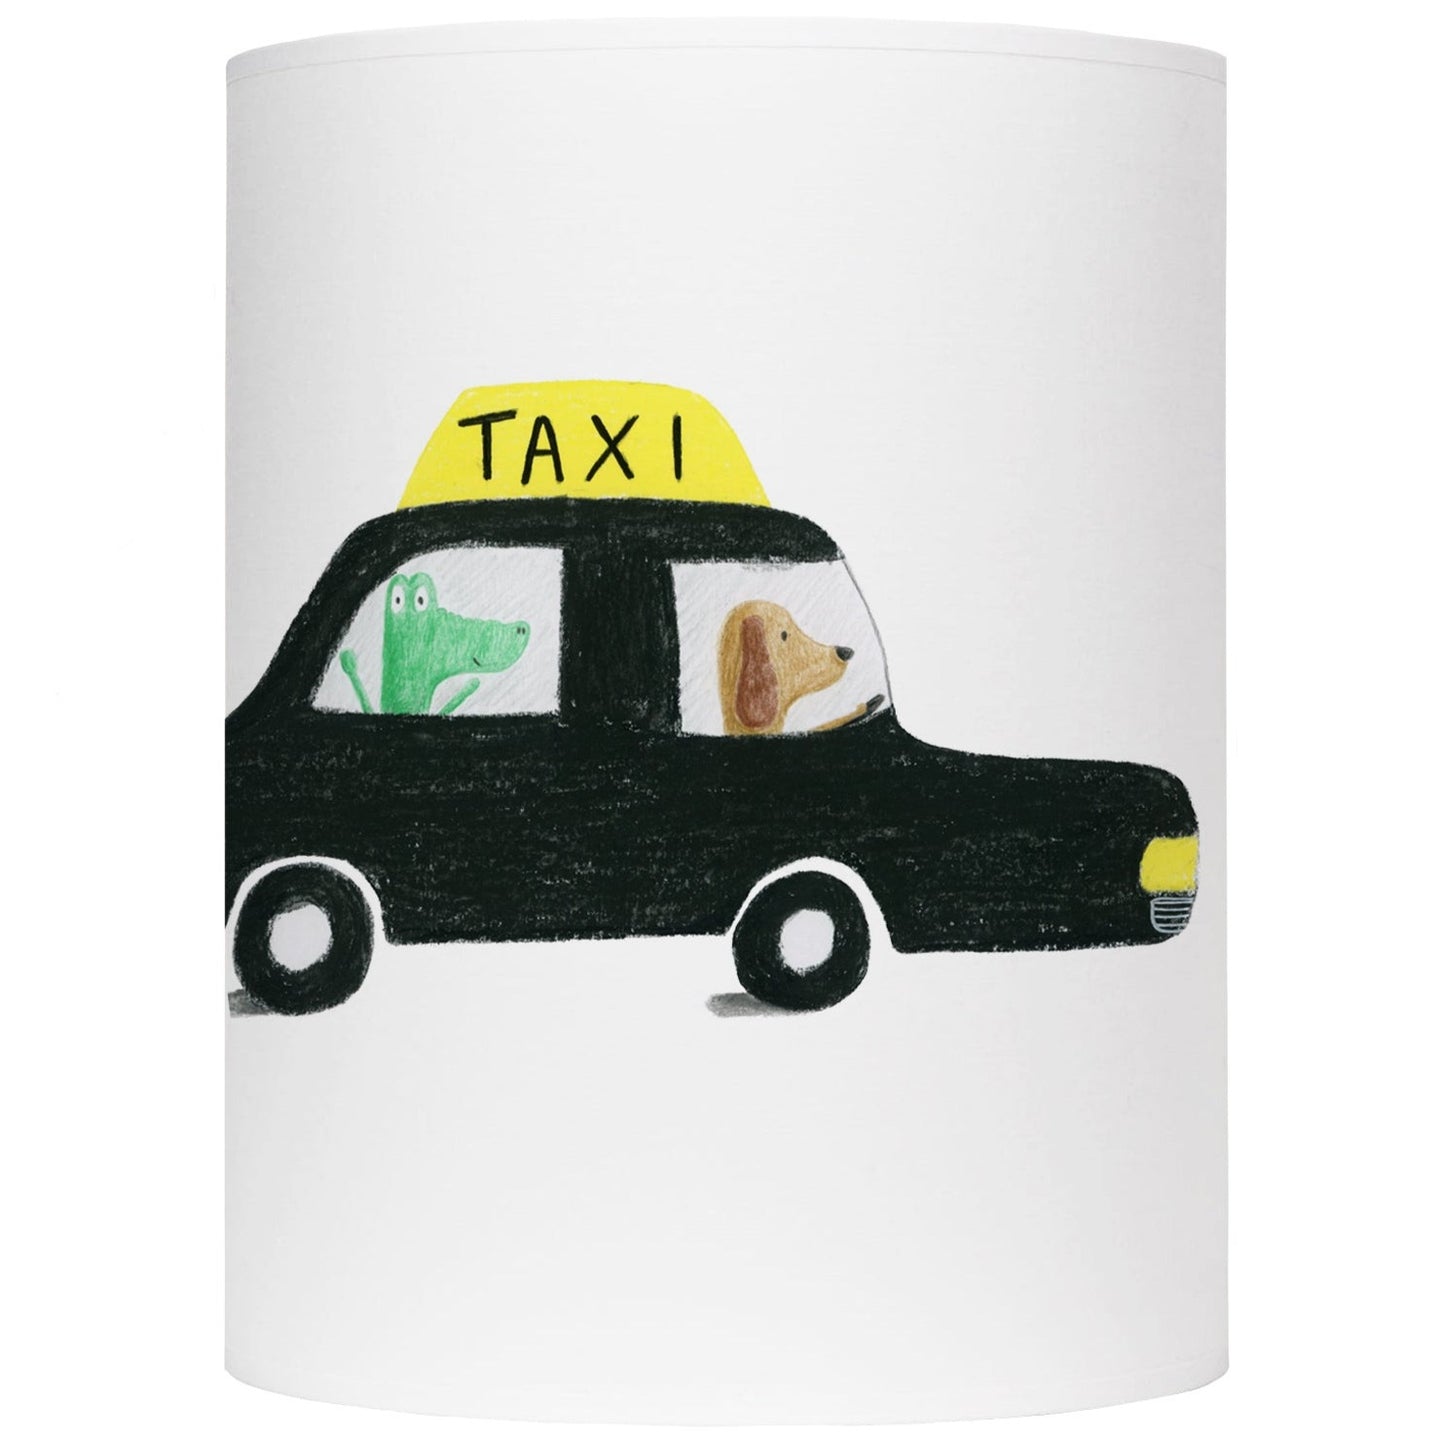 Taxi lamp shade/ceiling shade